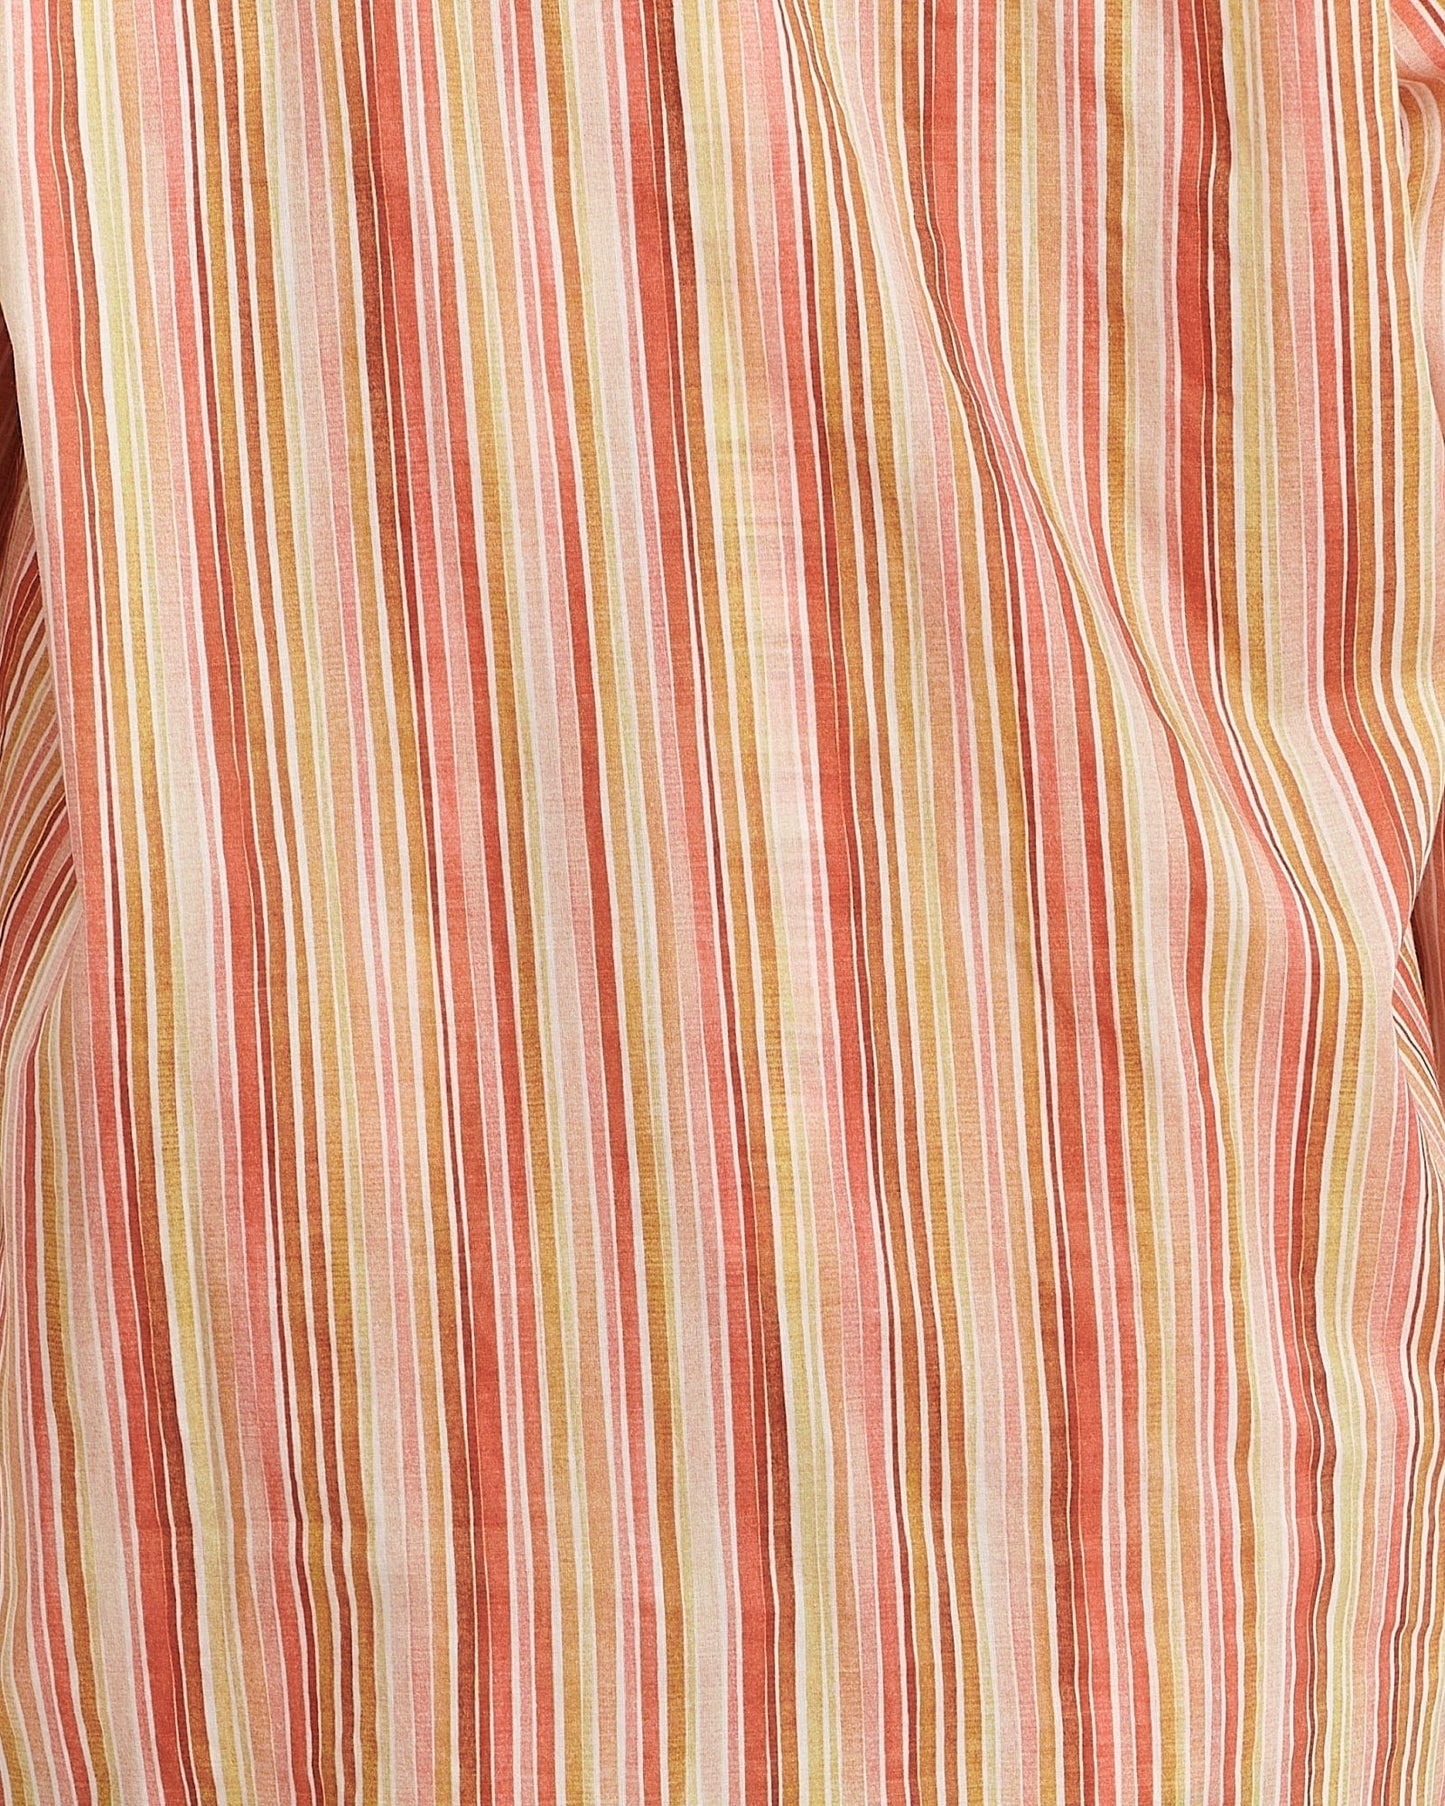 Heidi Shirt Stripe